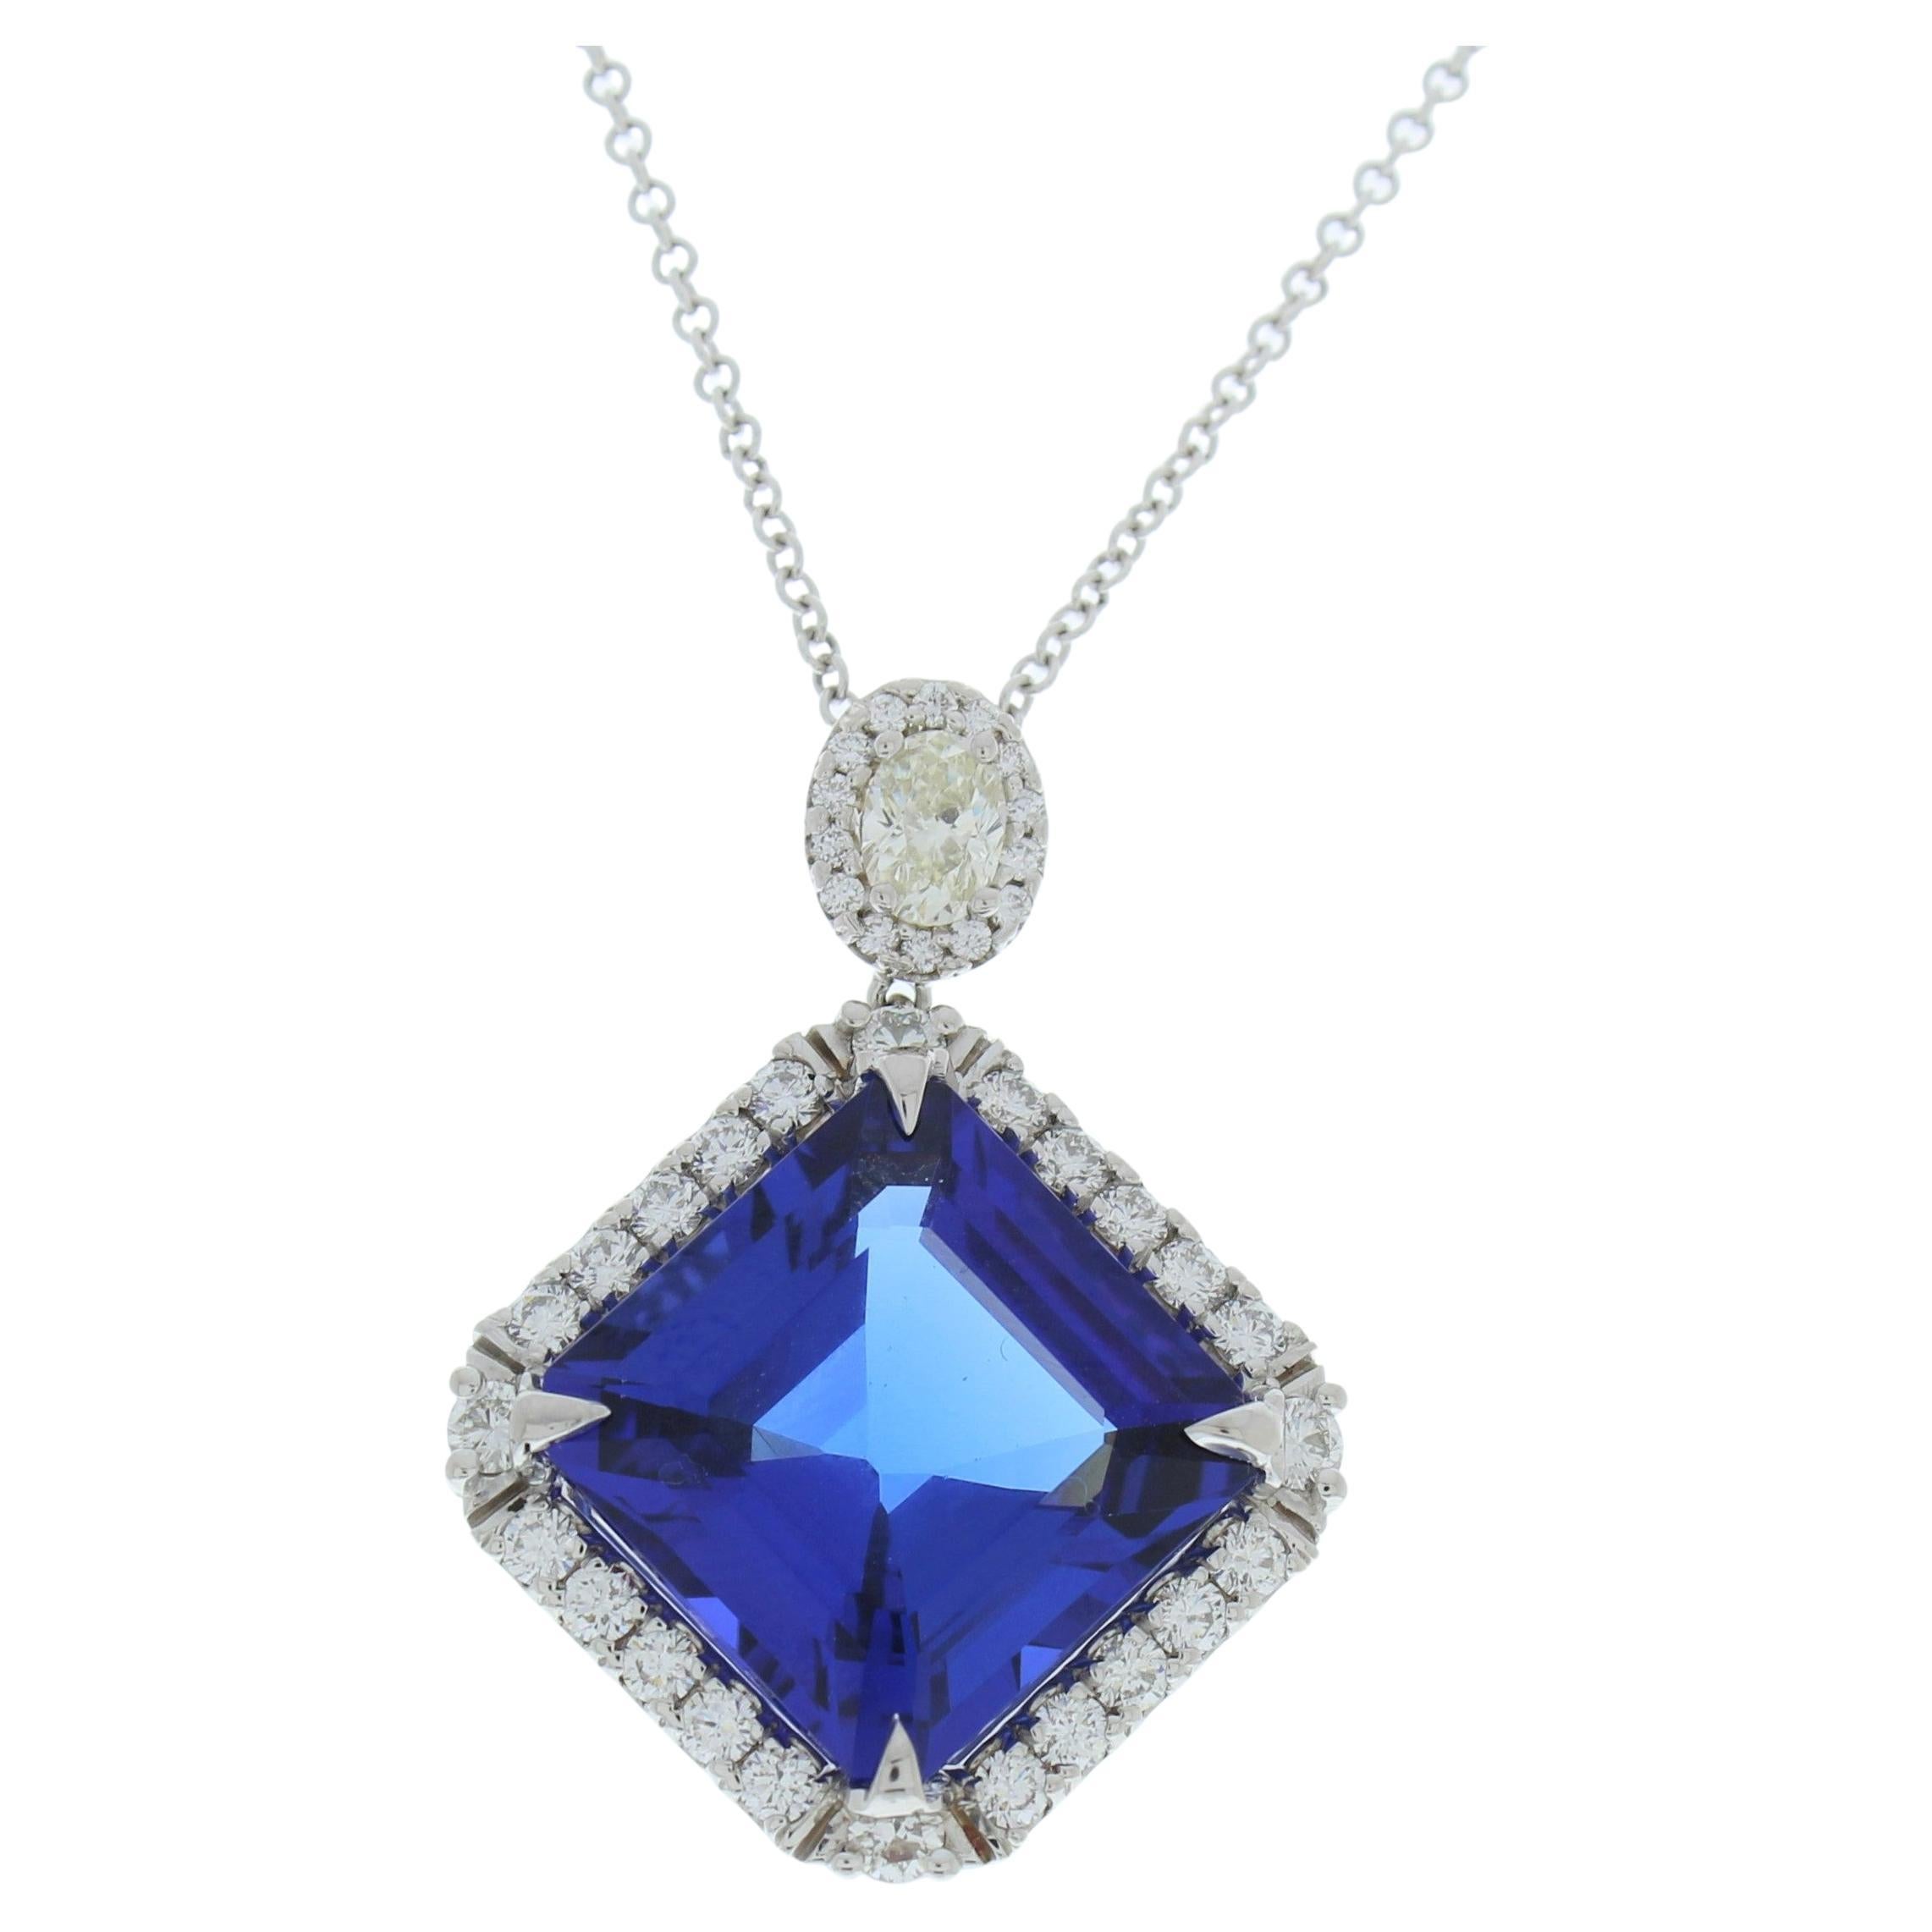 21 Carat Square Emerald Bluish Violet & Diamond Fashion Pendants In 18K WG